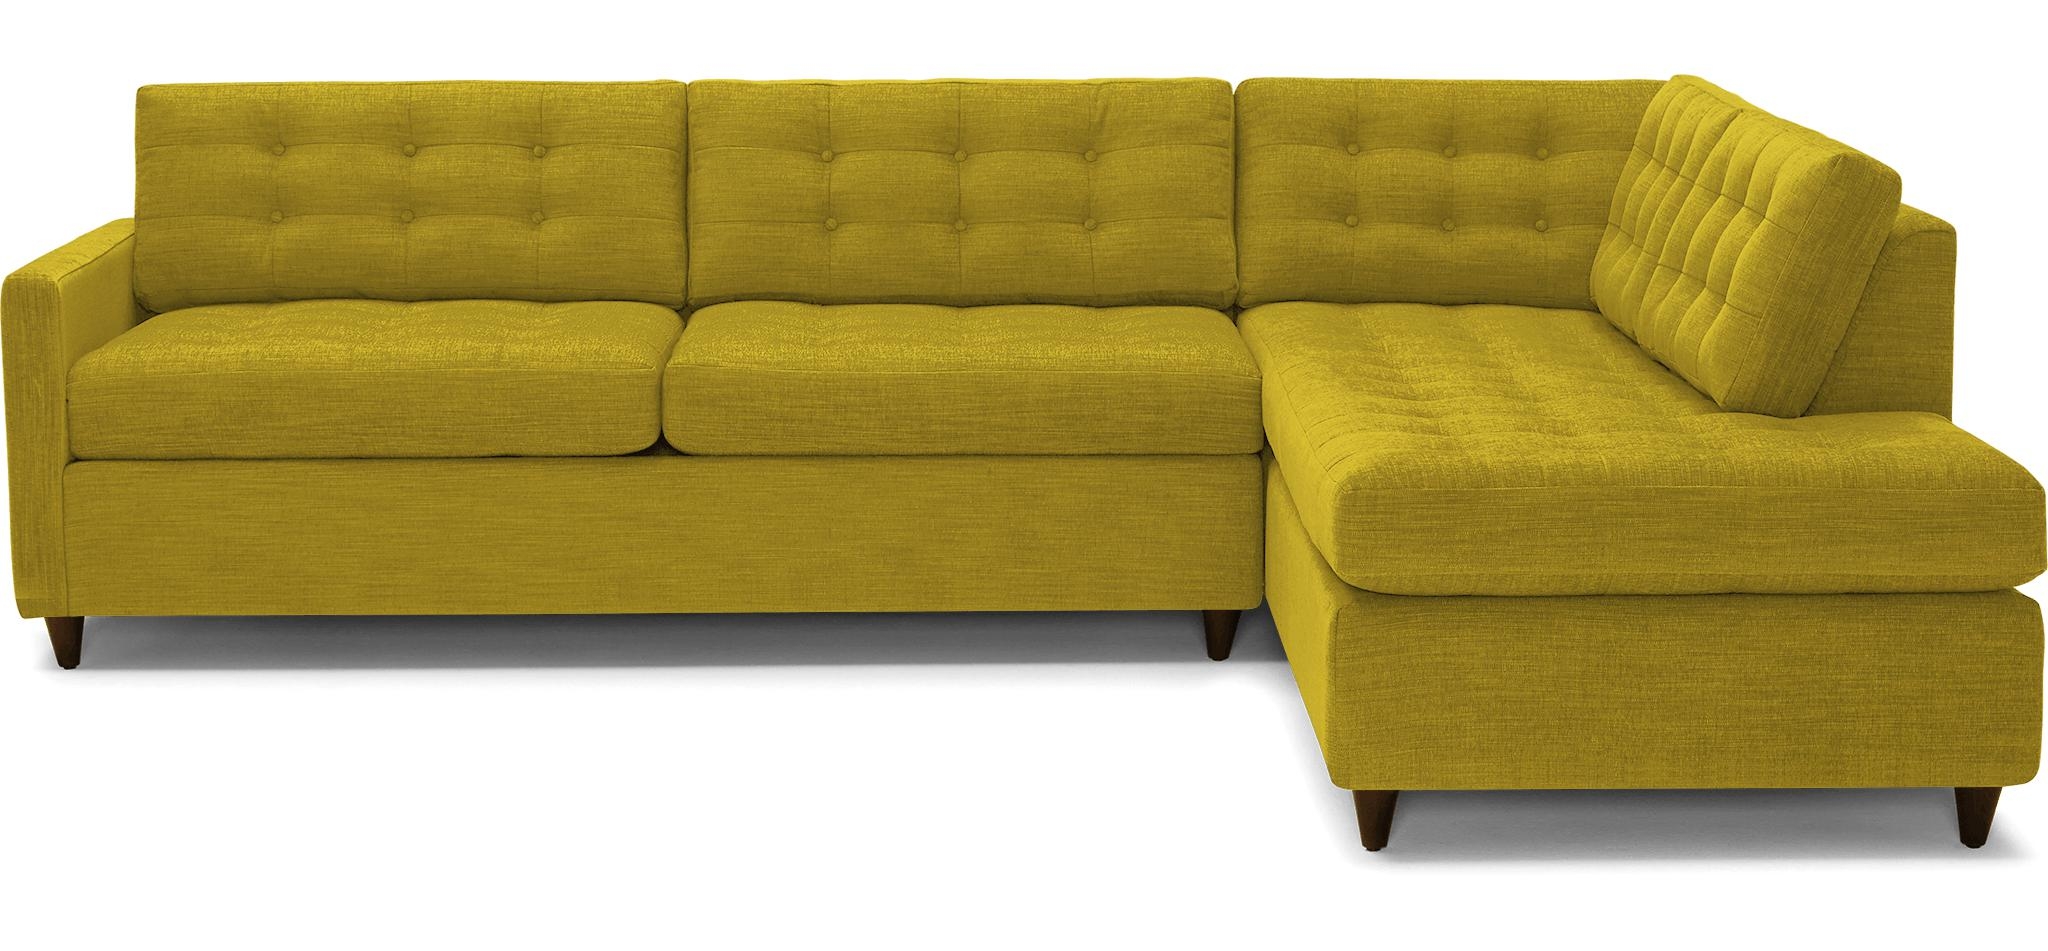 Yellow Eliot Mid Century Modern Bumper Sleeper Sectional - Bloke Goldenrod - Mocha - Right  - Image 0